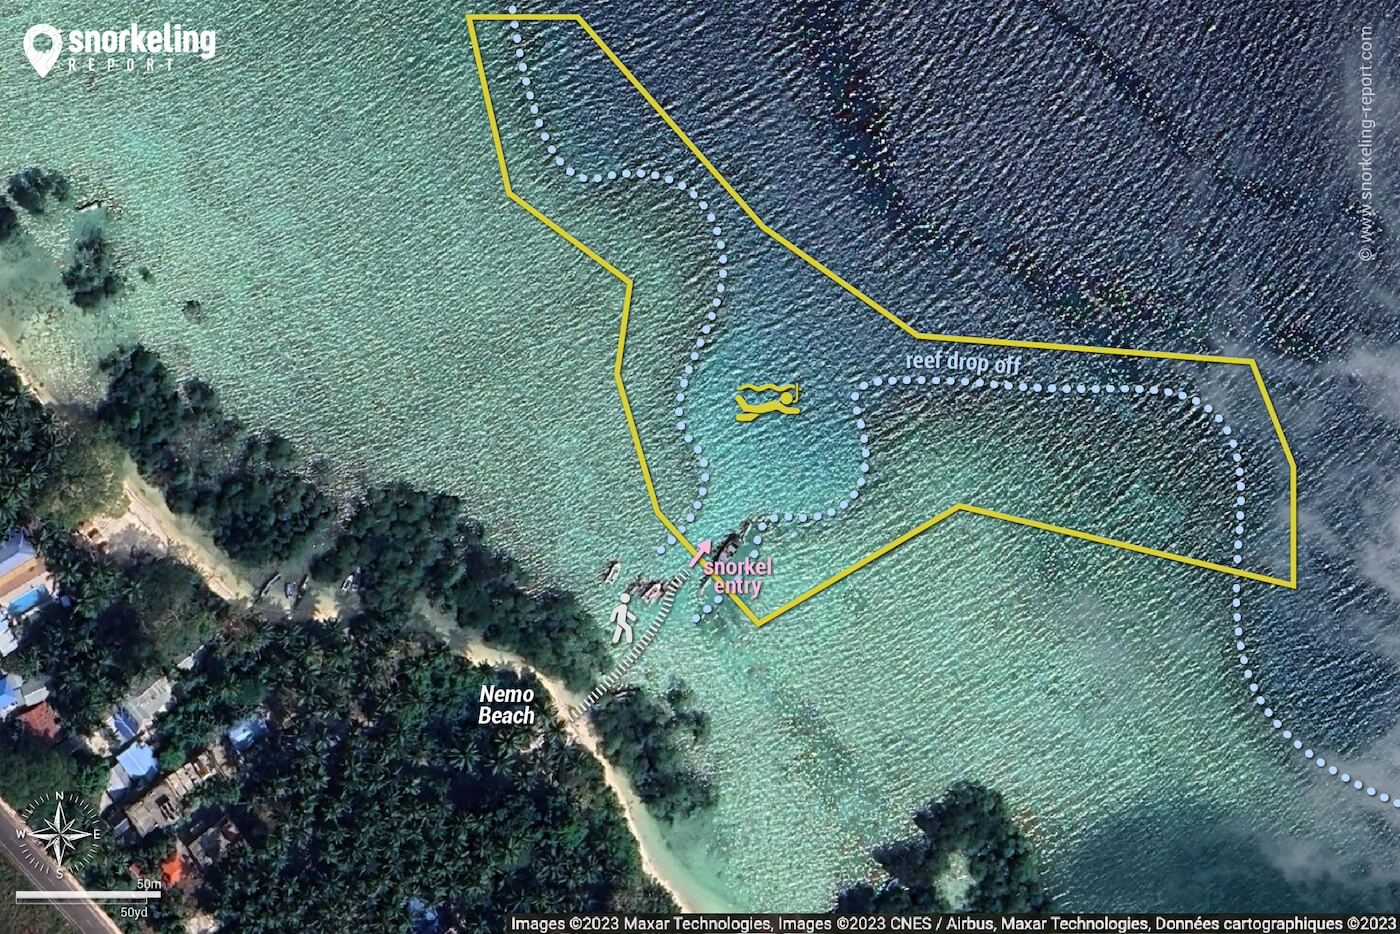 Nemo Beach snorkeling map, Havelock Island